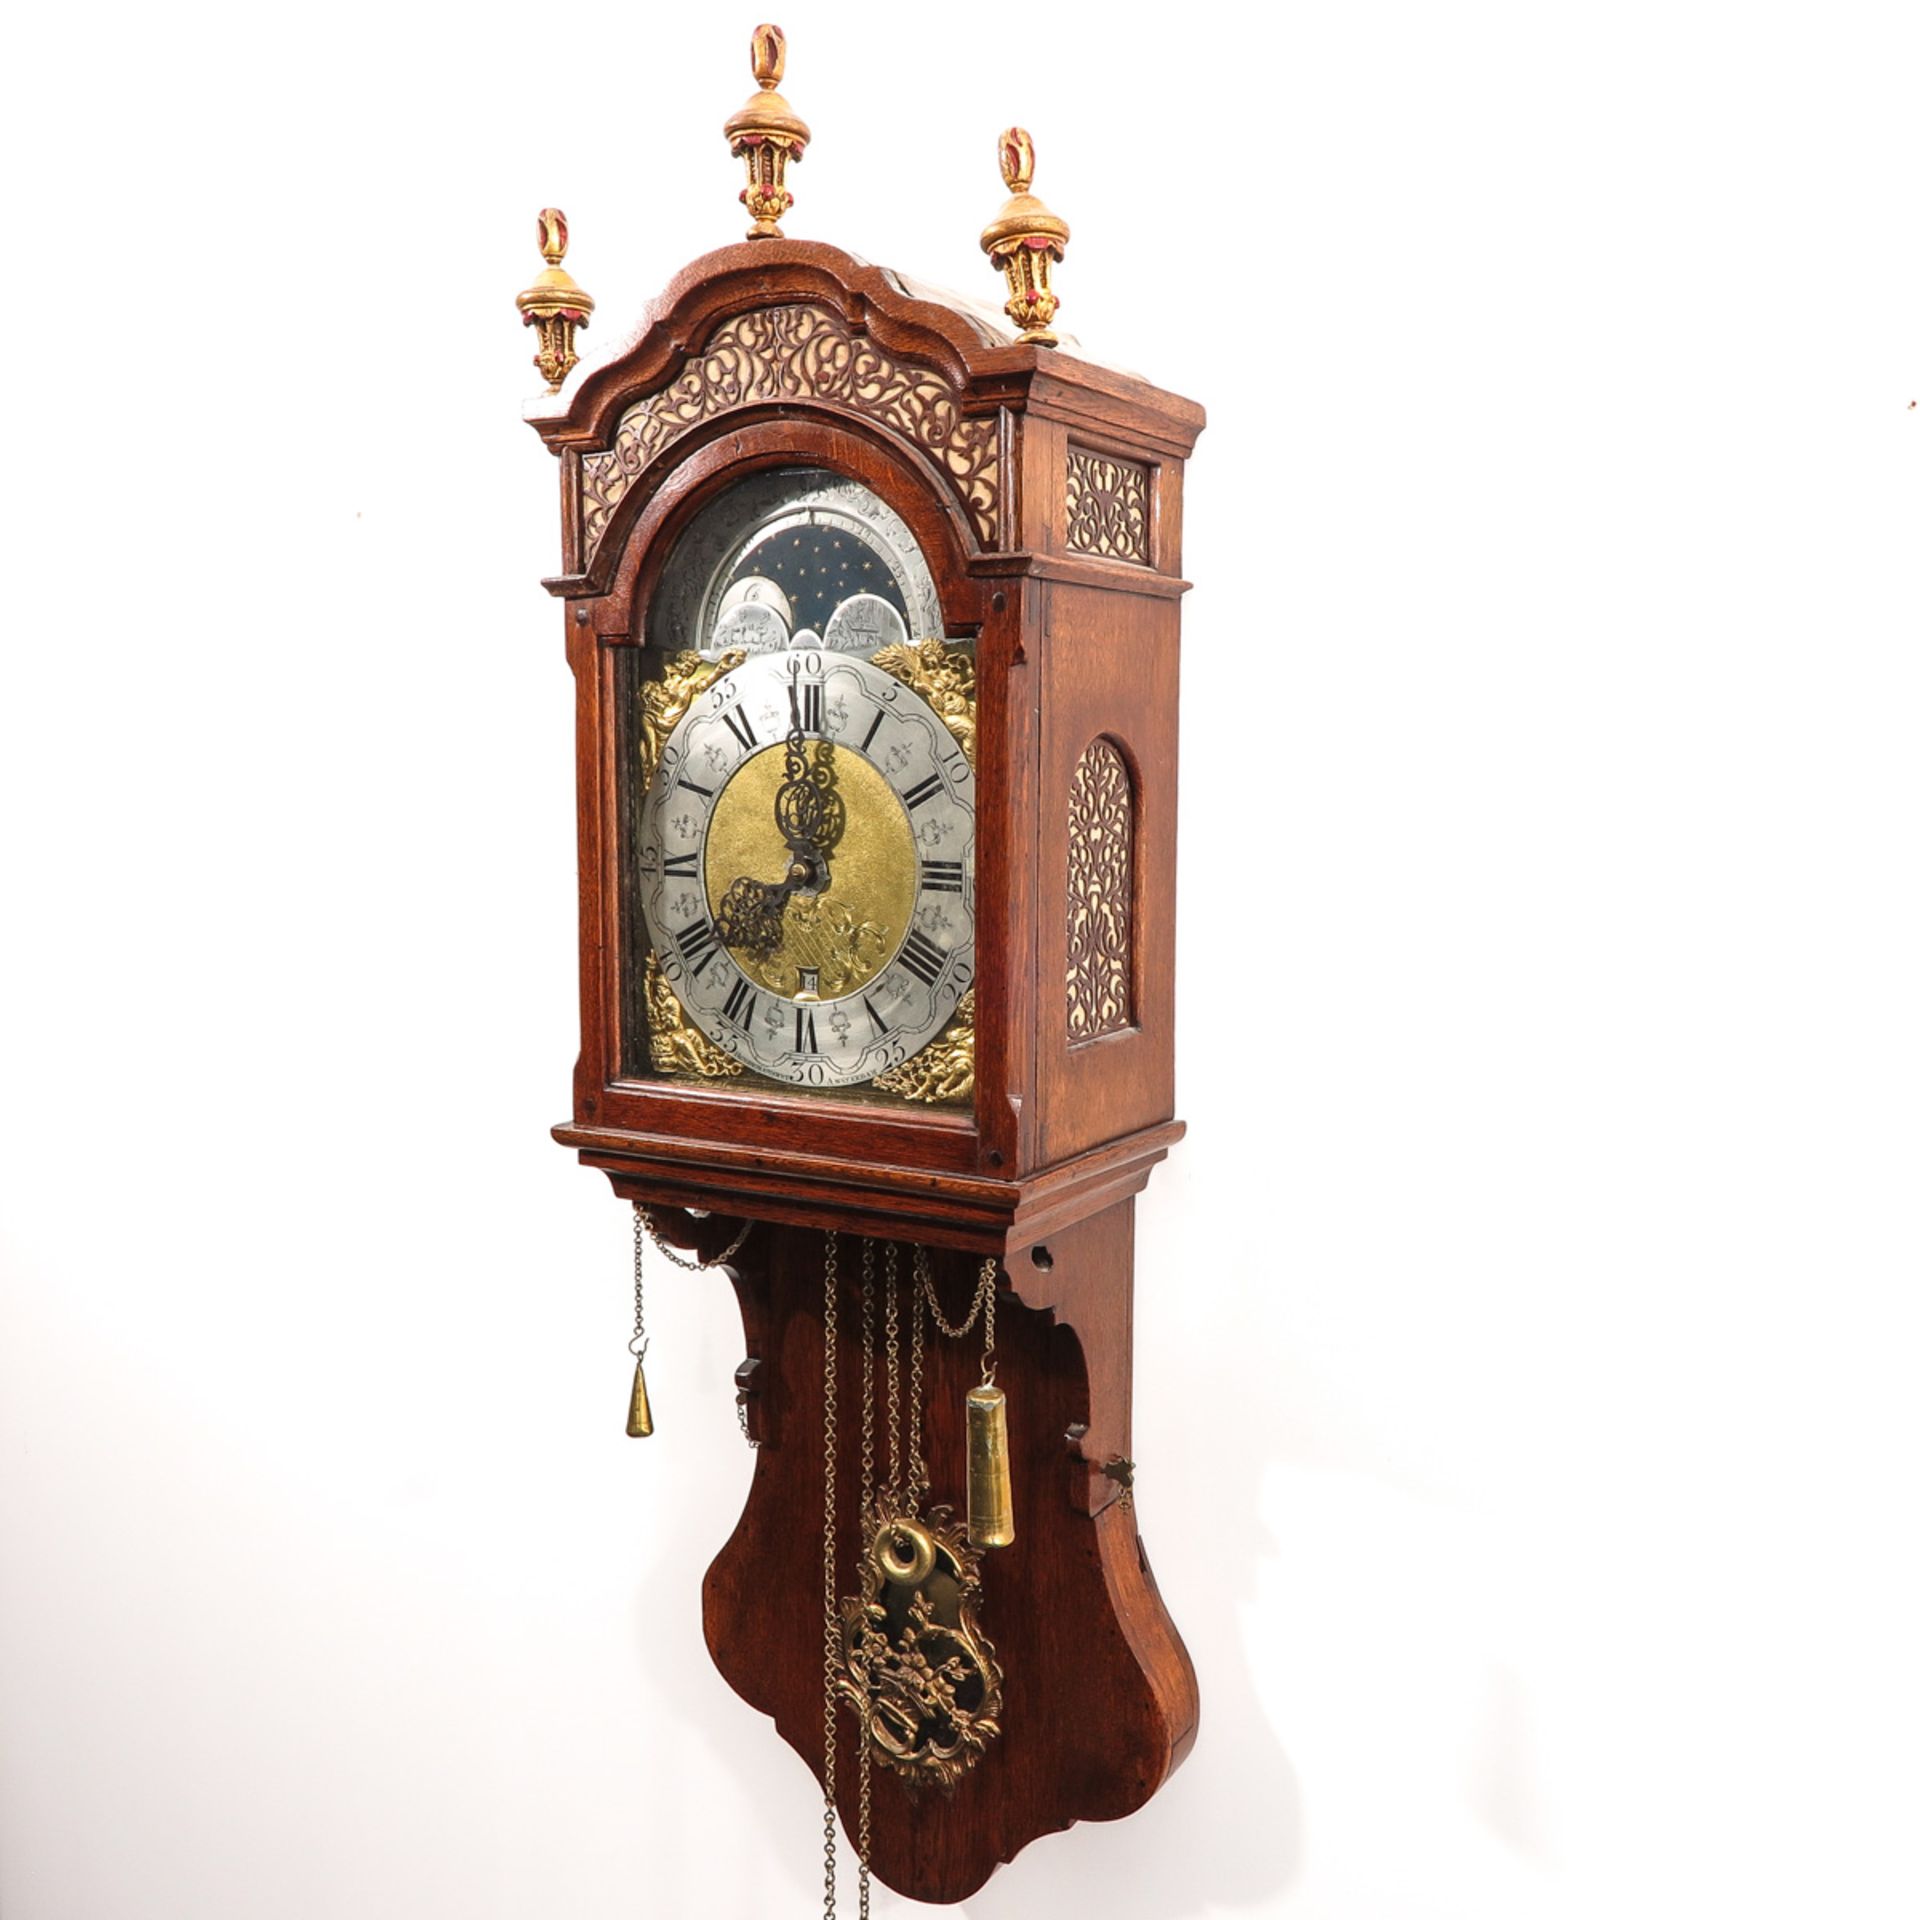 Kortstraat clock - Image 9 of 9